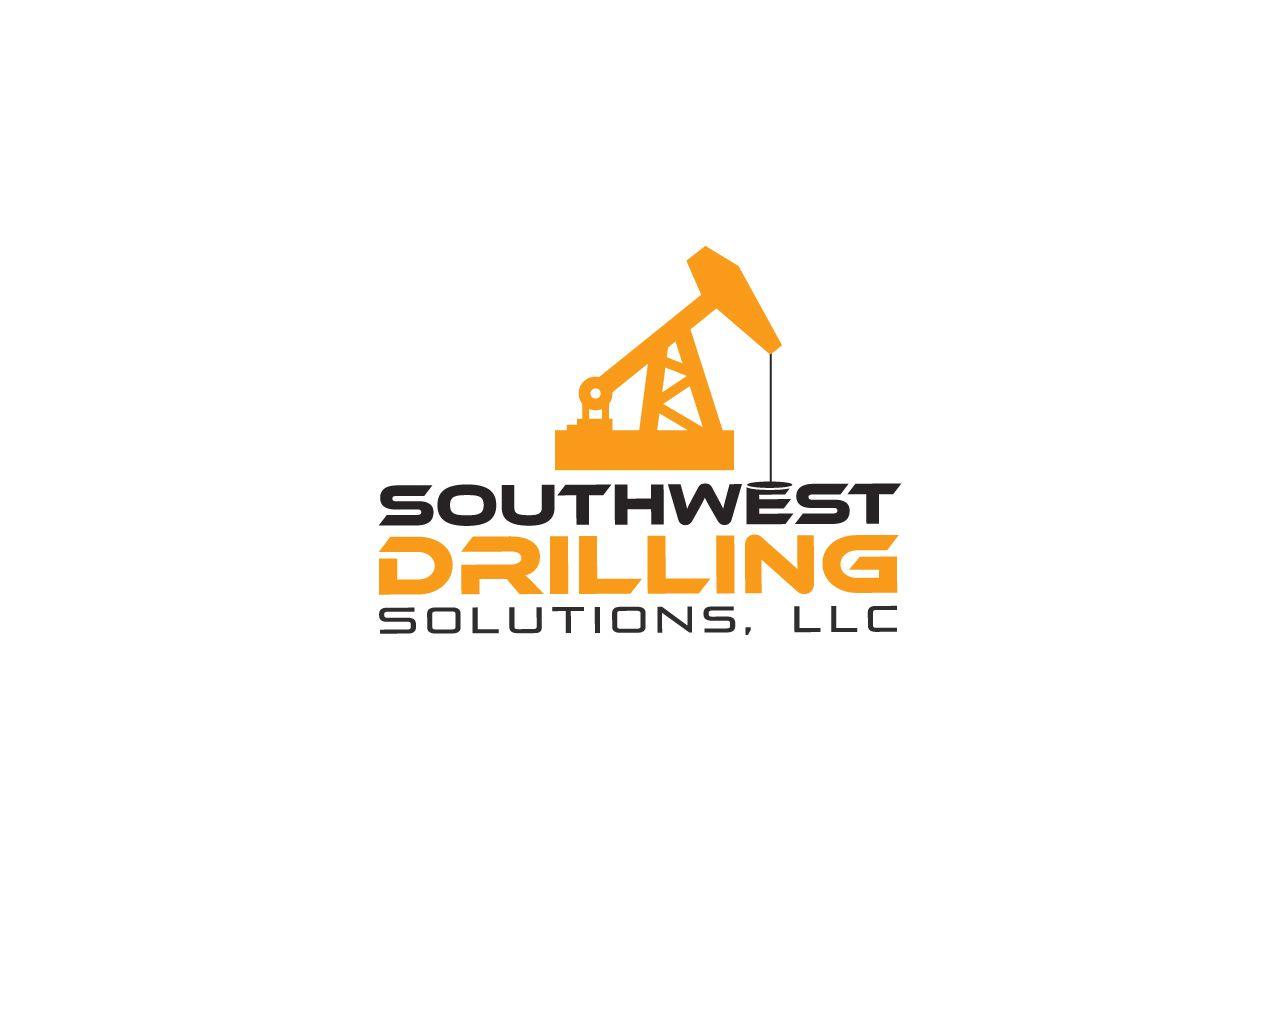 Southwest Company Logo - Elegant, Playful, Oil And Gas Logo Design for Southwest Drilling ...